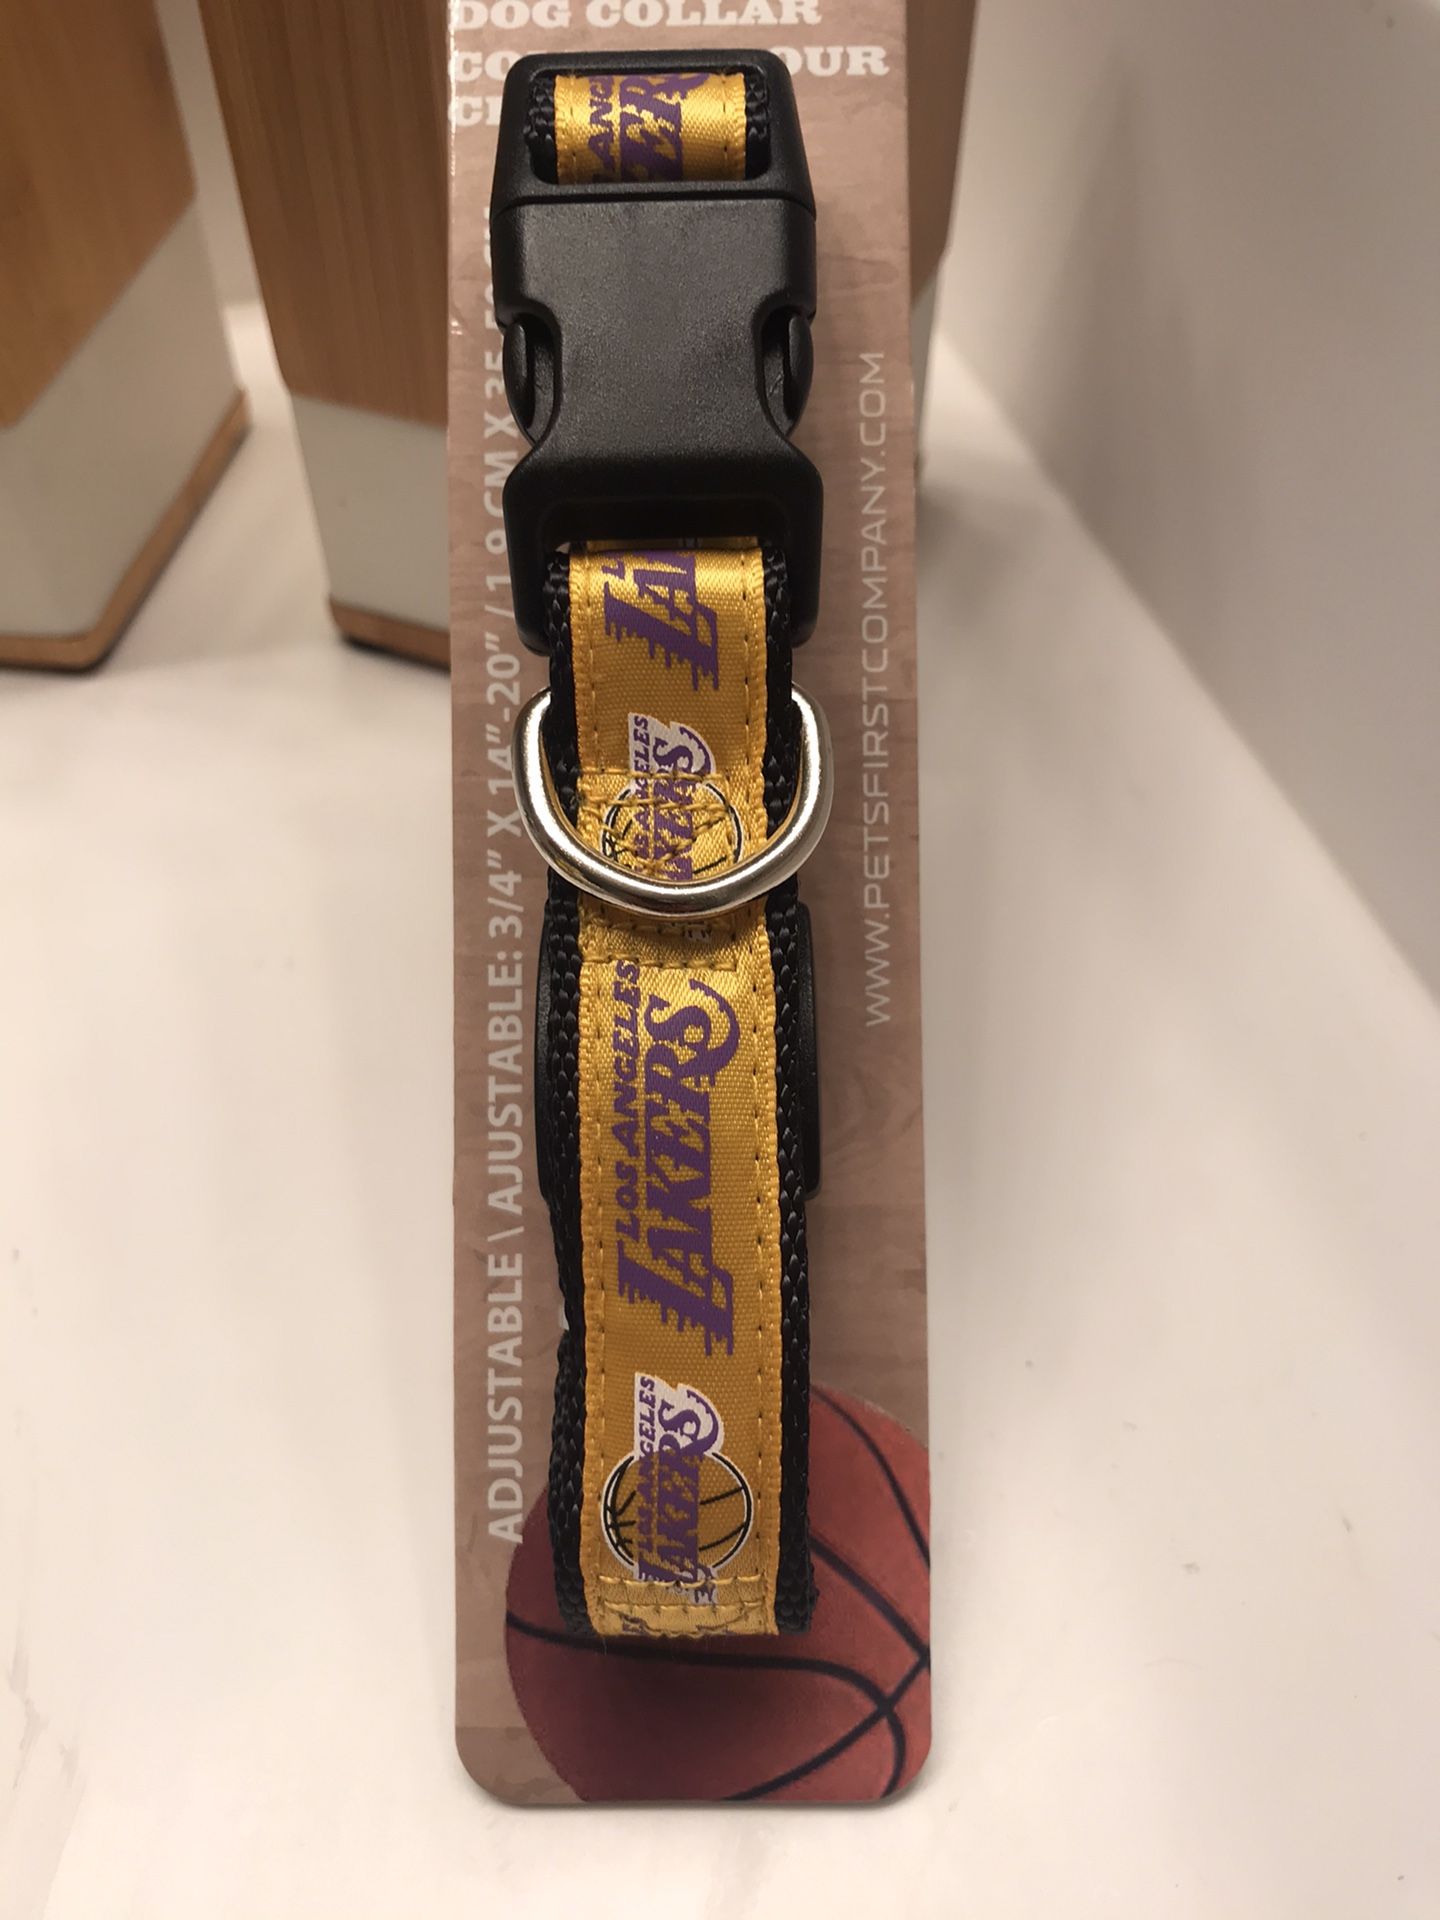 Lakers dog collar